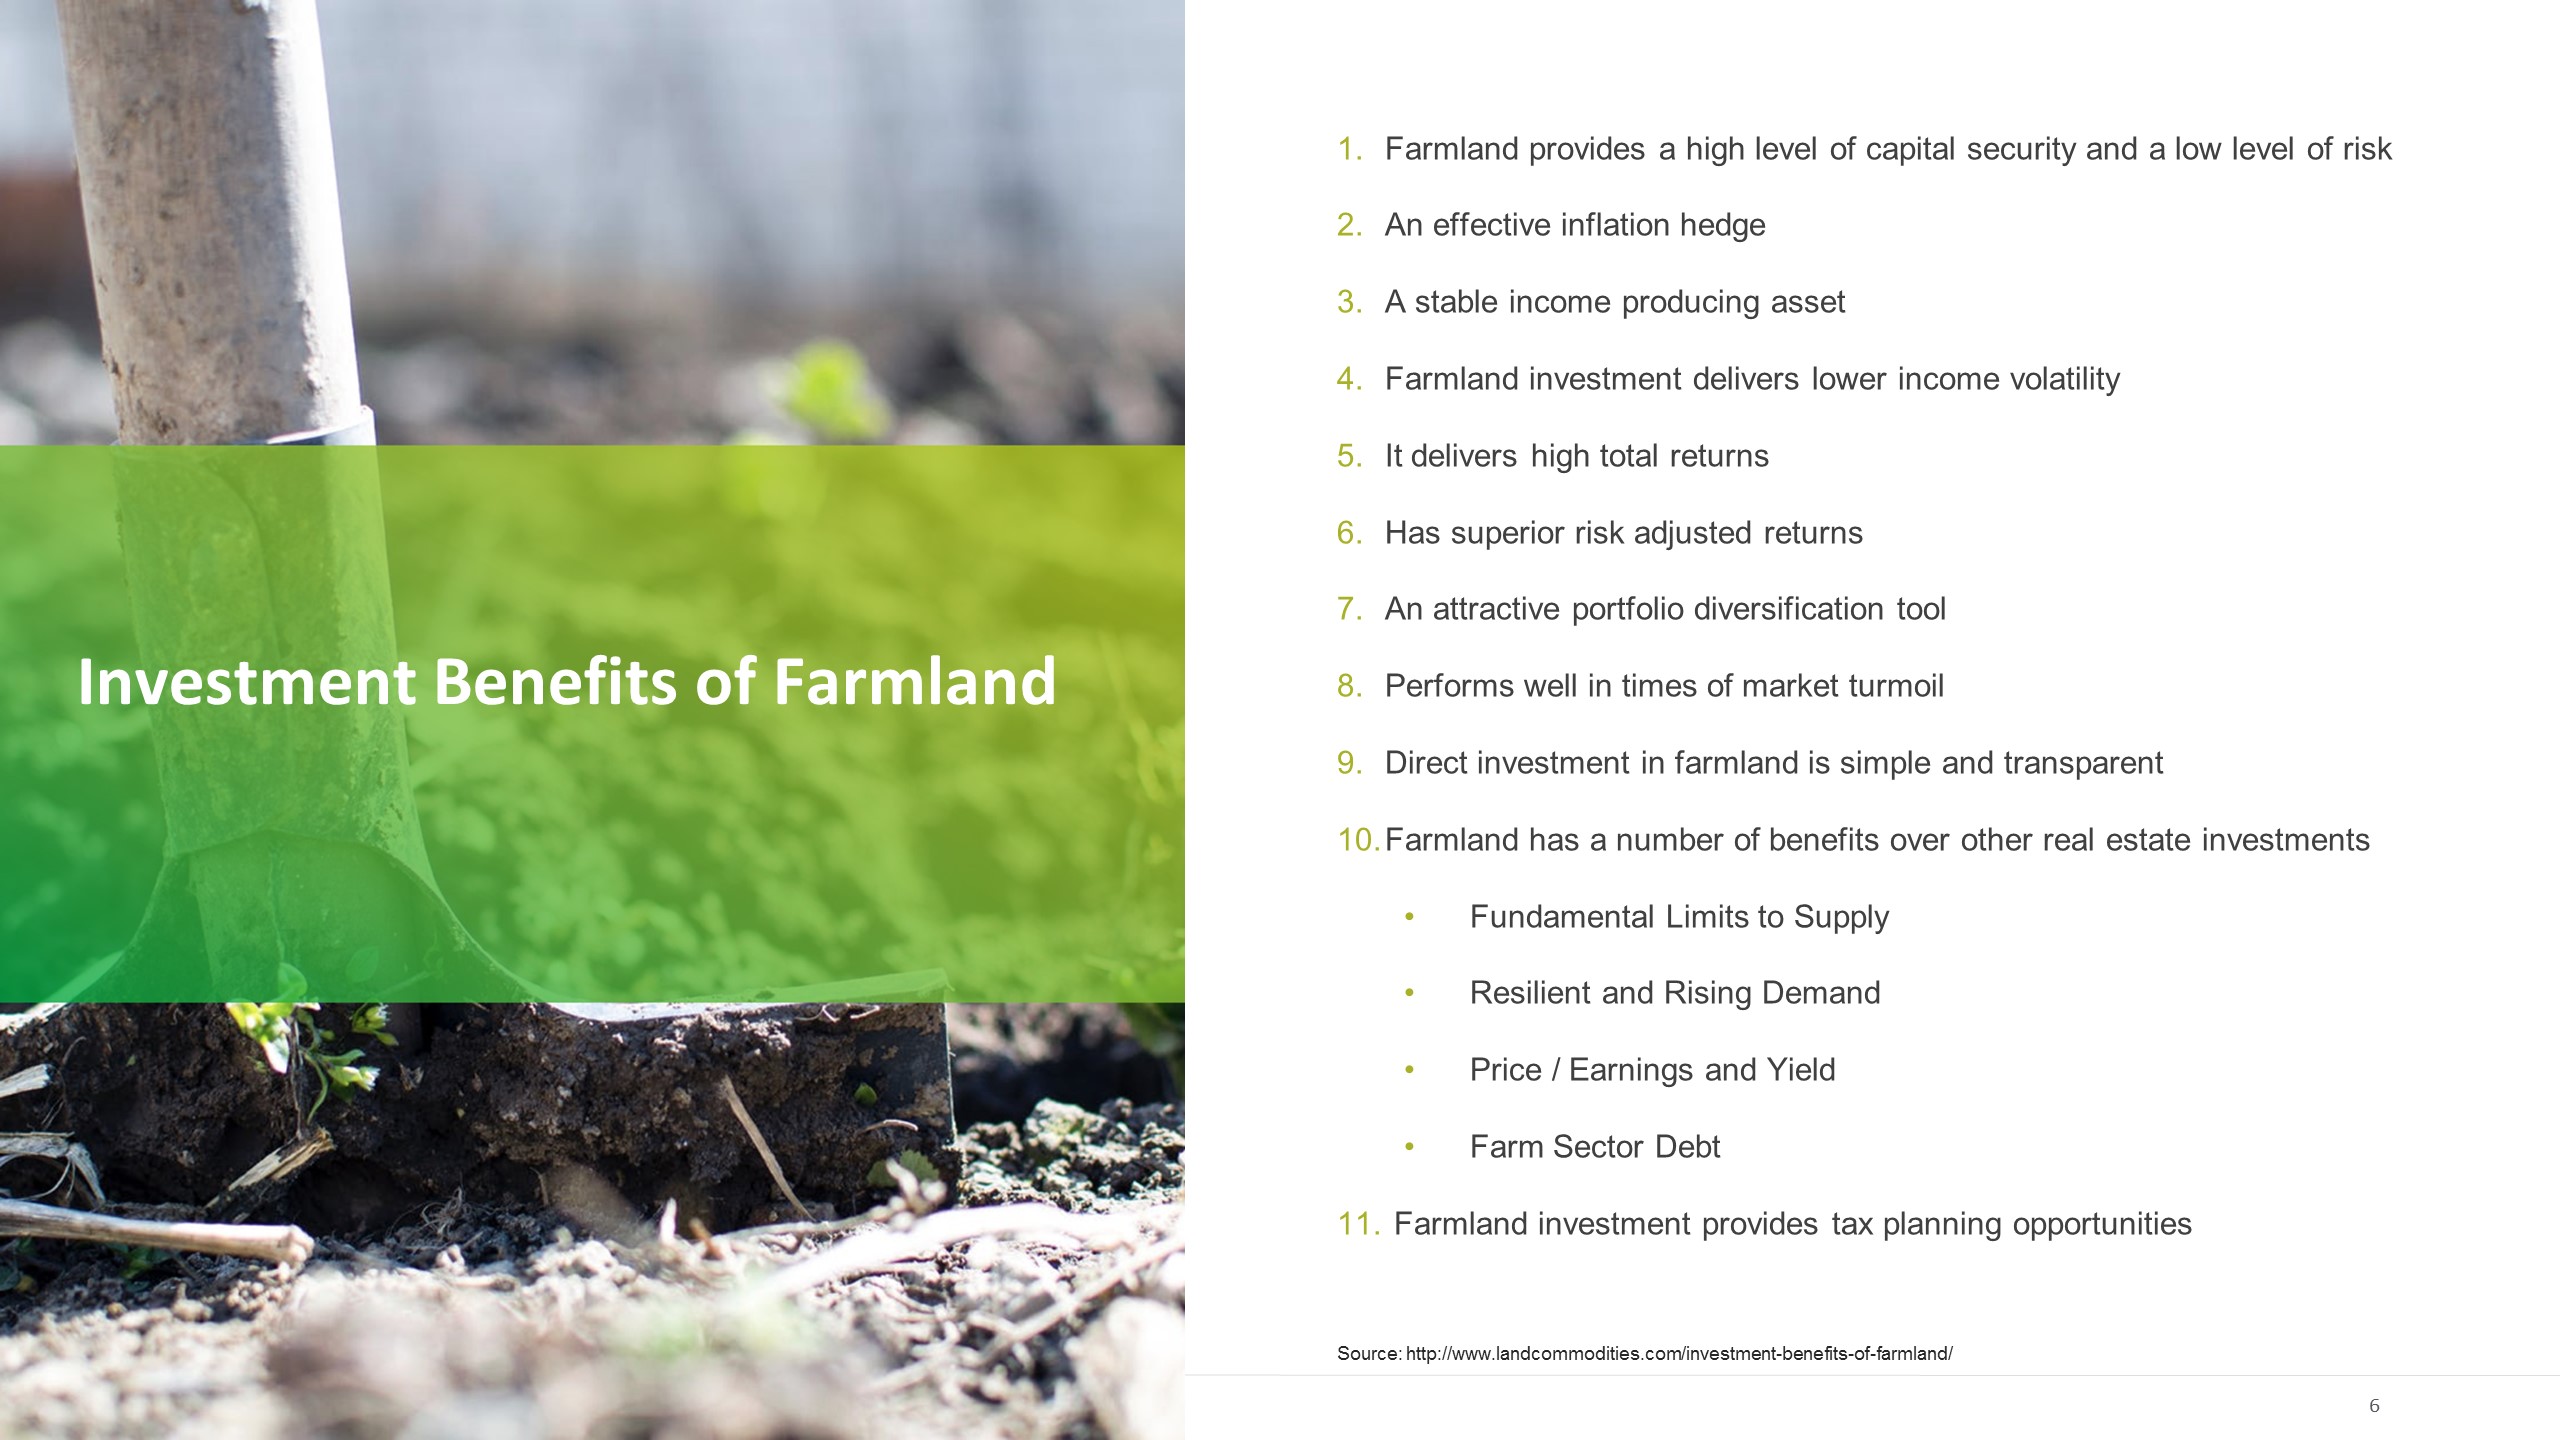 Research Report on Asset Class (Farmland/ Timberland)